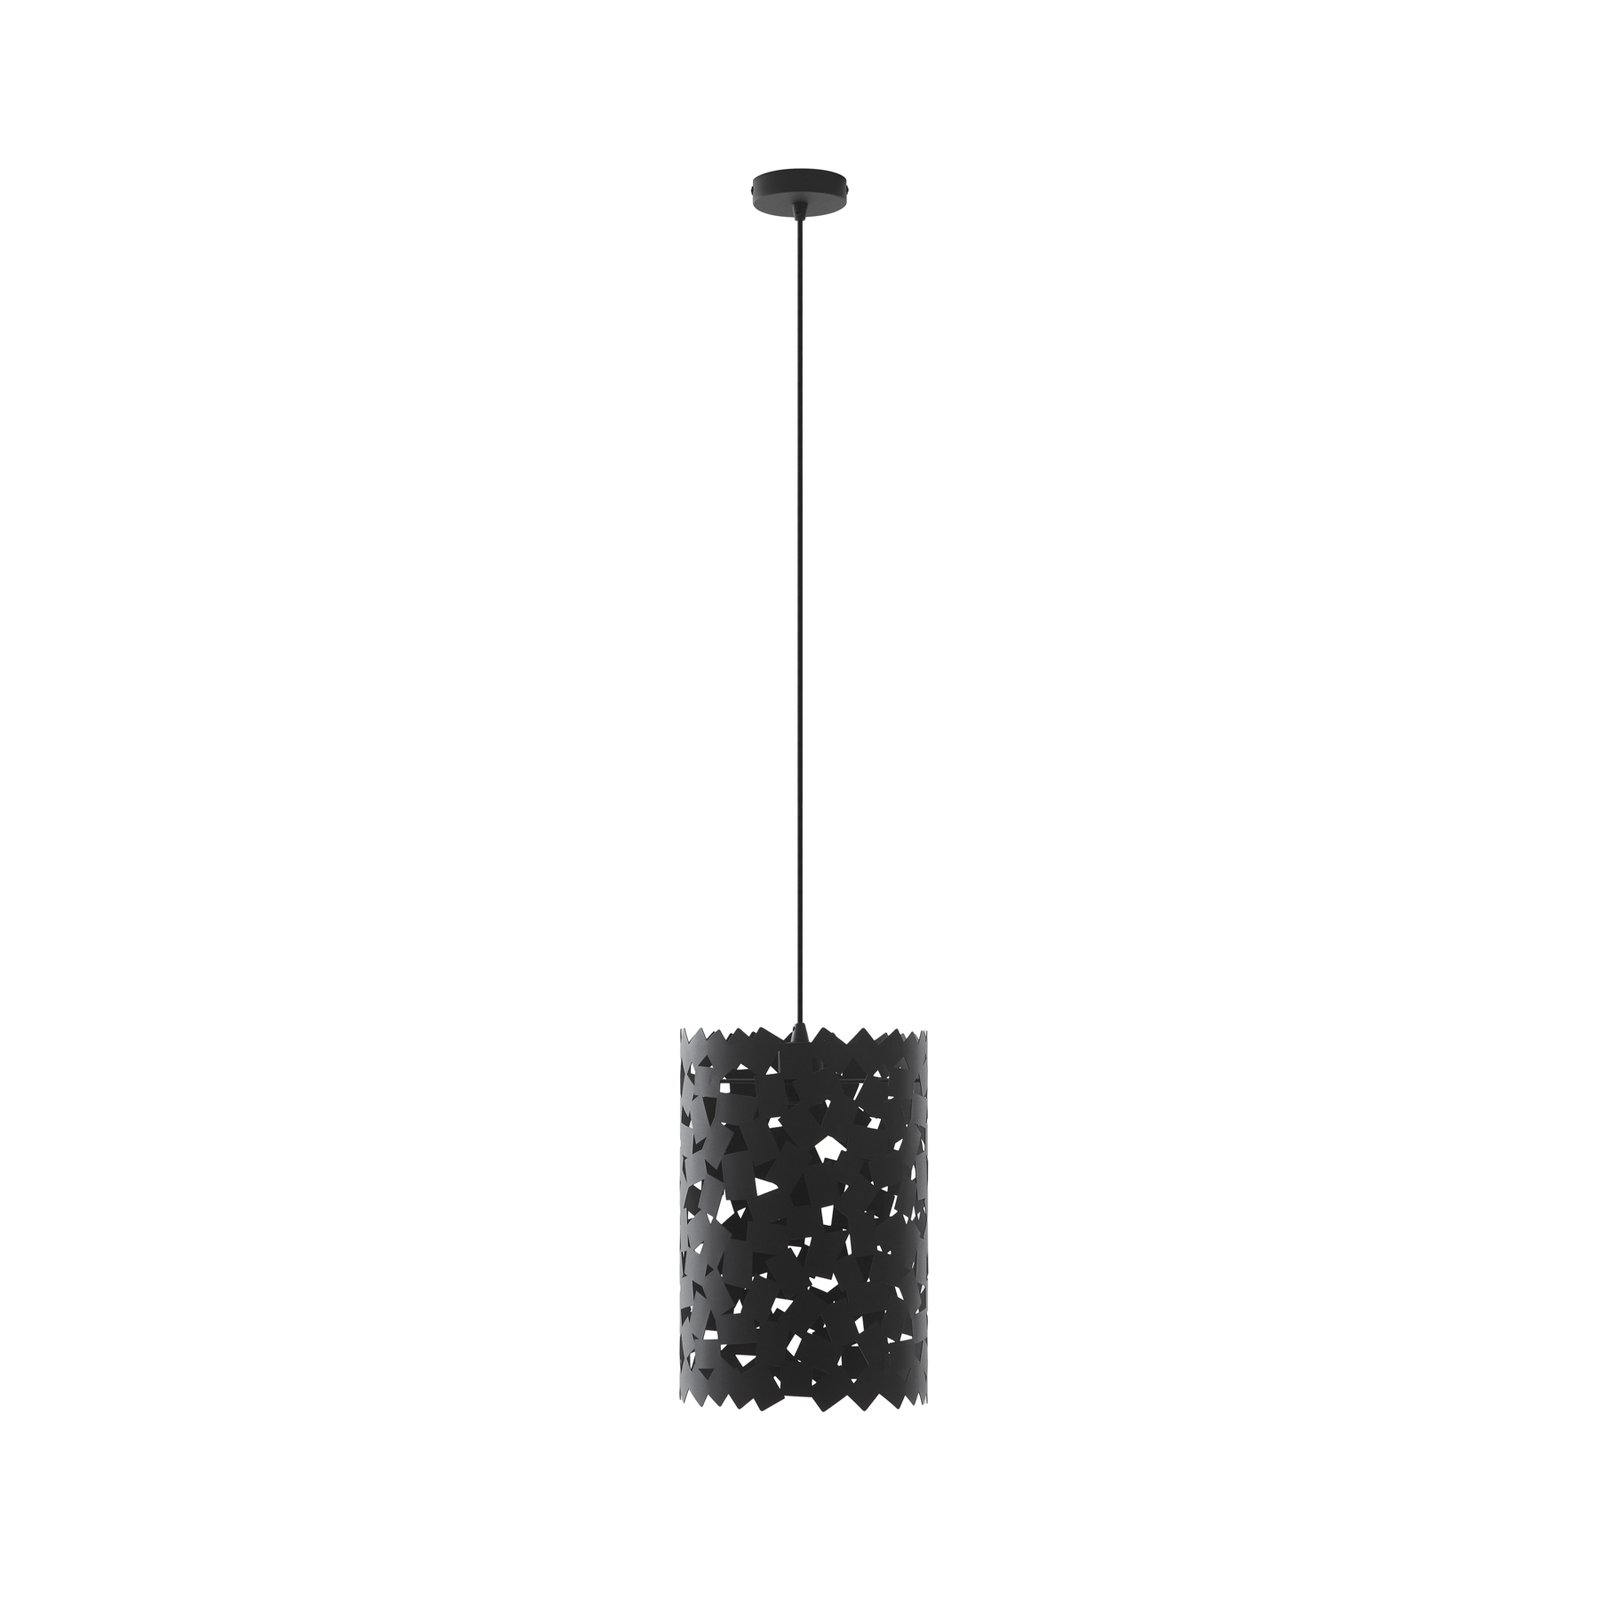 Lucande hanglamp Aeloria, zwart, Ø 25 cm, ijzer, E27